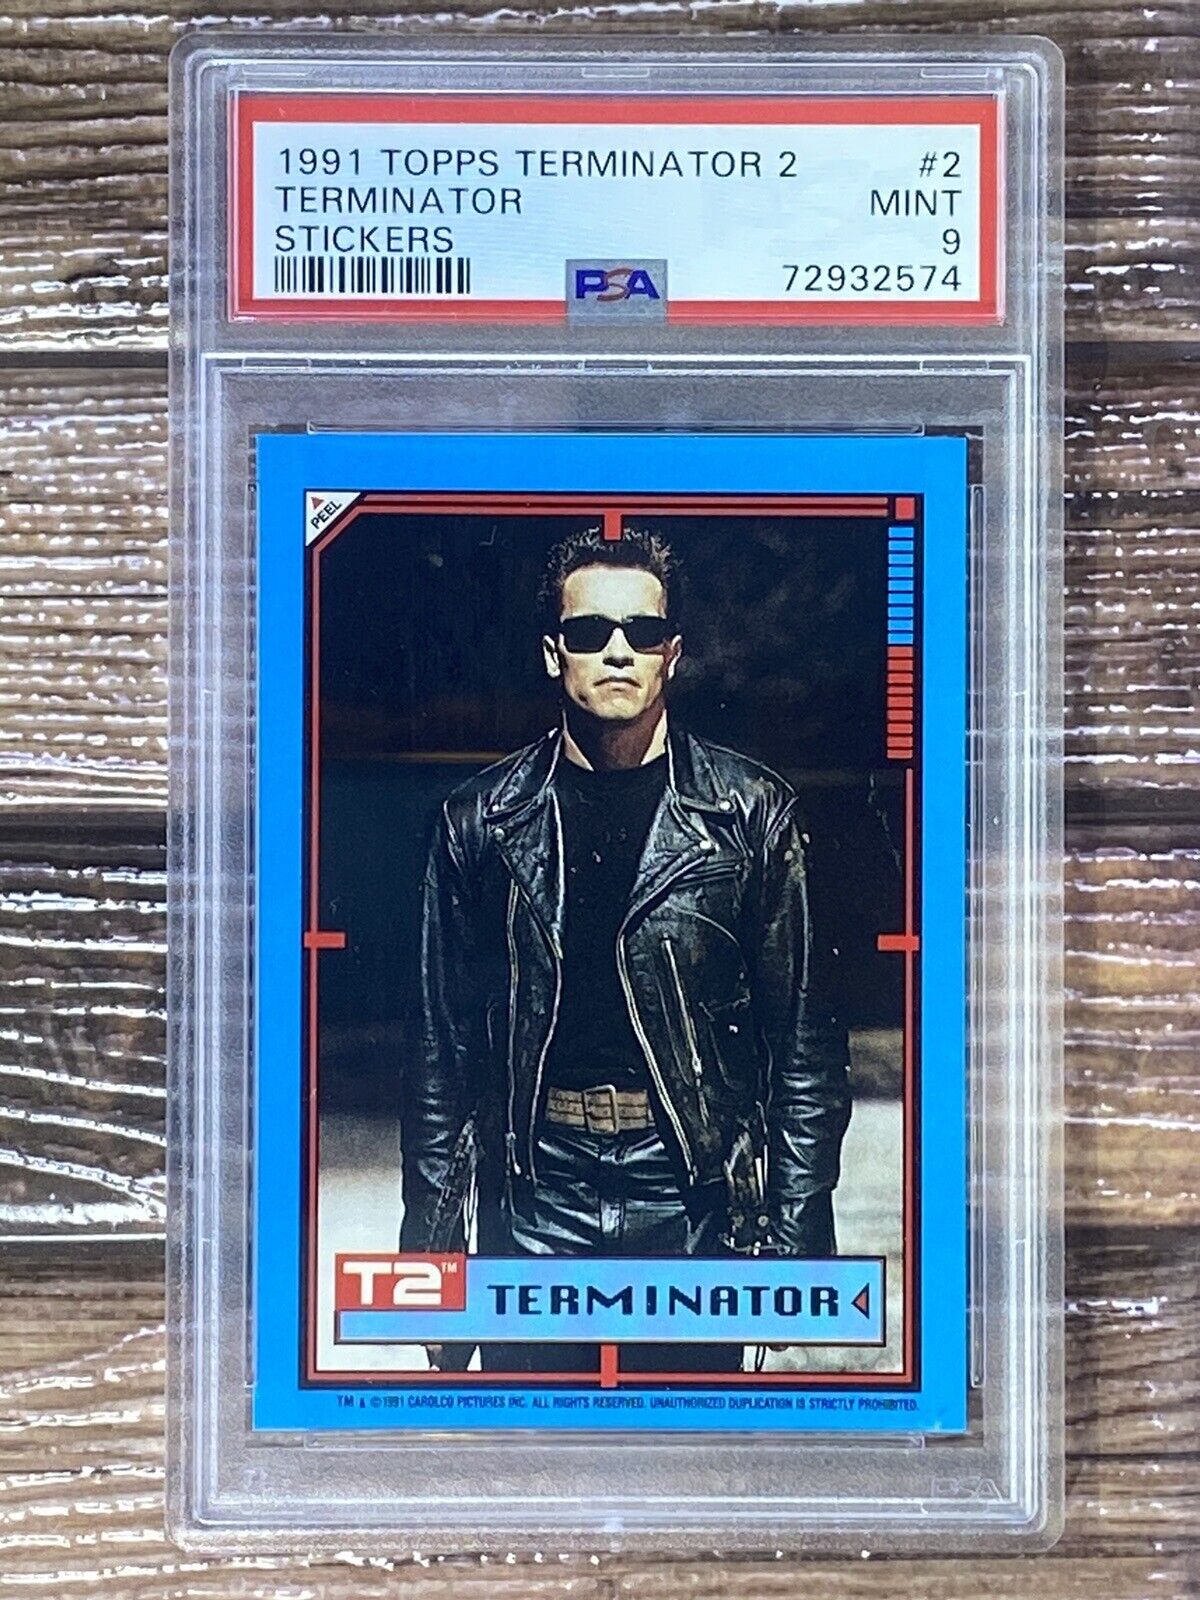 1991 Topps Terminator 2 Stickers Terminator #2 PSA 9